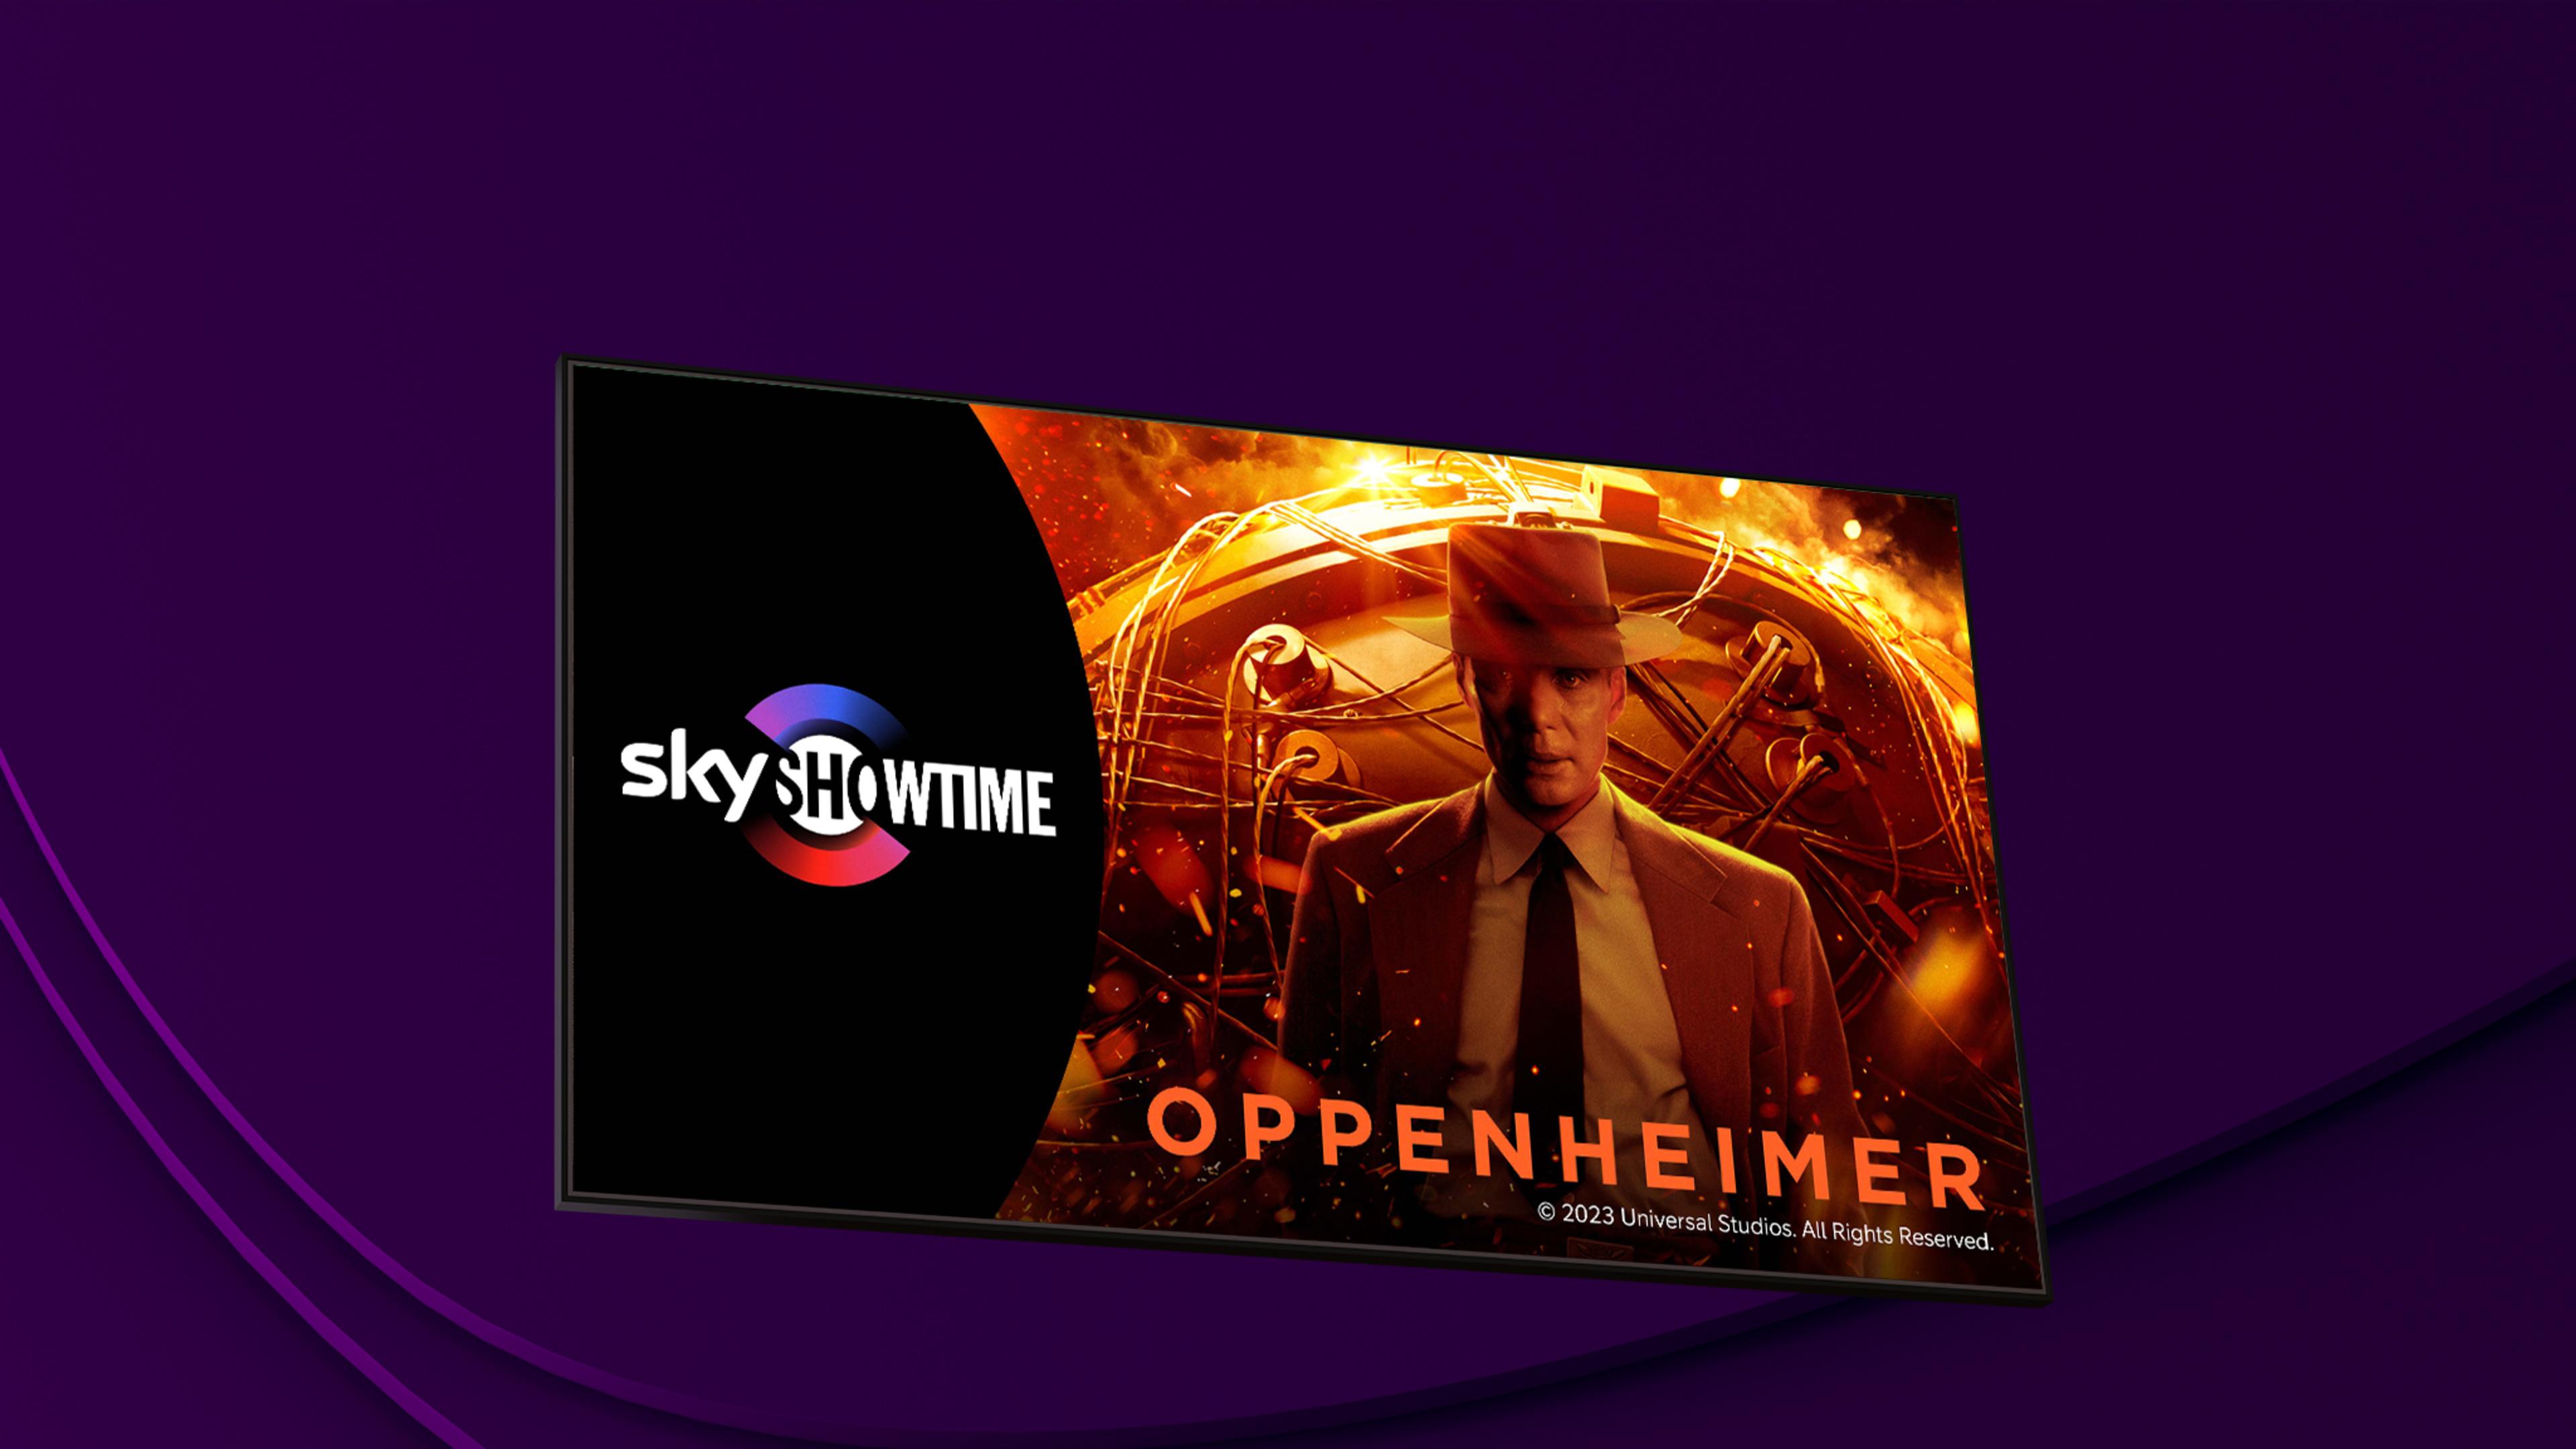 Se storfilmen Oppenheimer av Christopher Nolan på Skyshowtime i mars. Bara en av många premiärer denna månad.